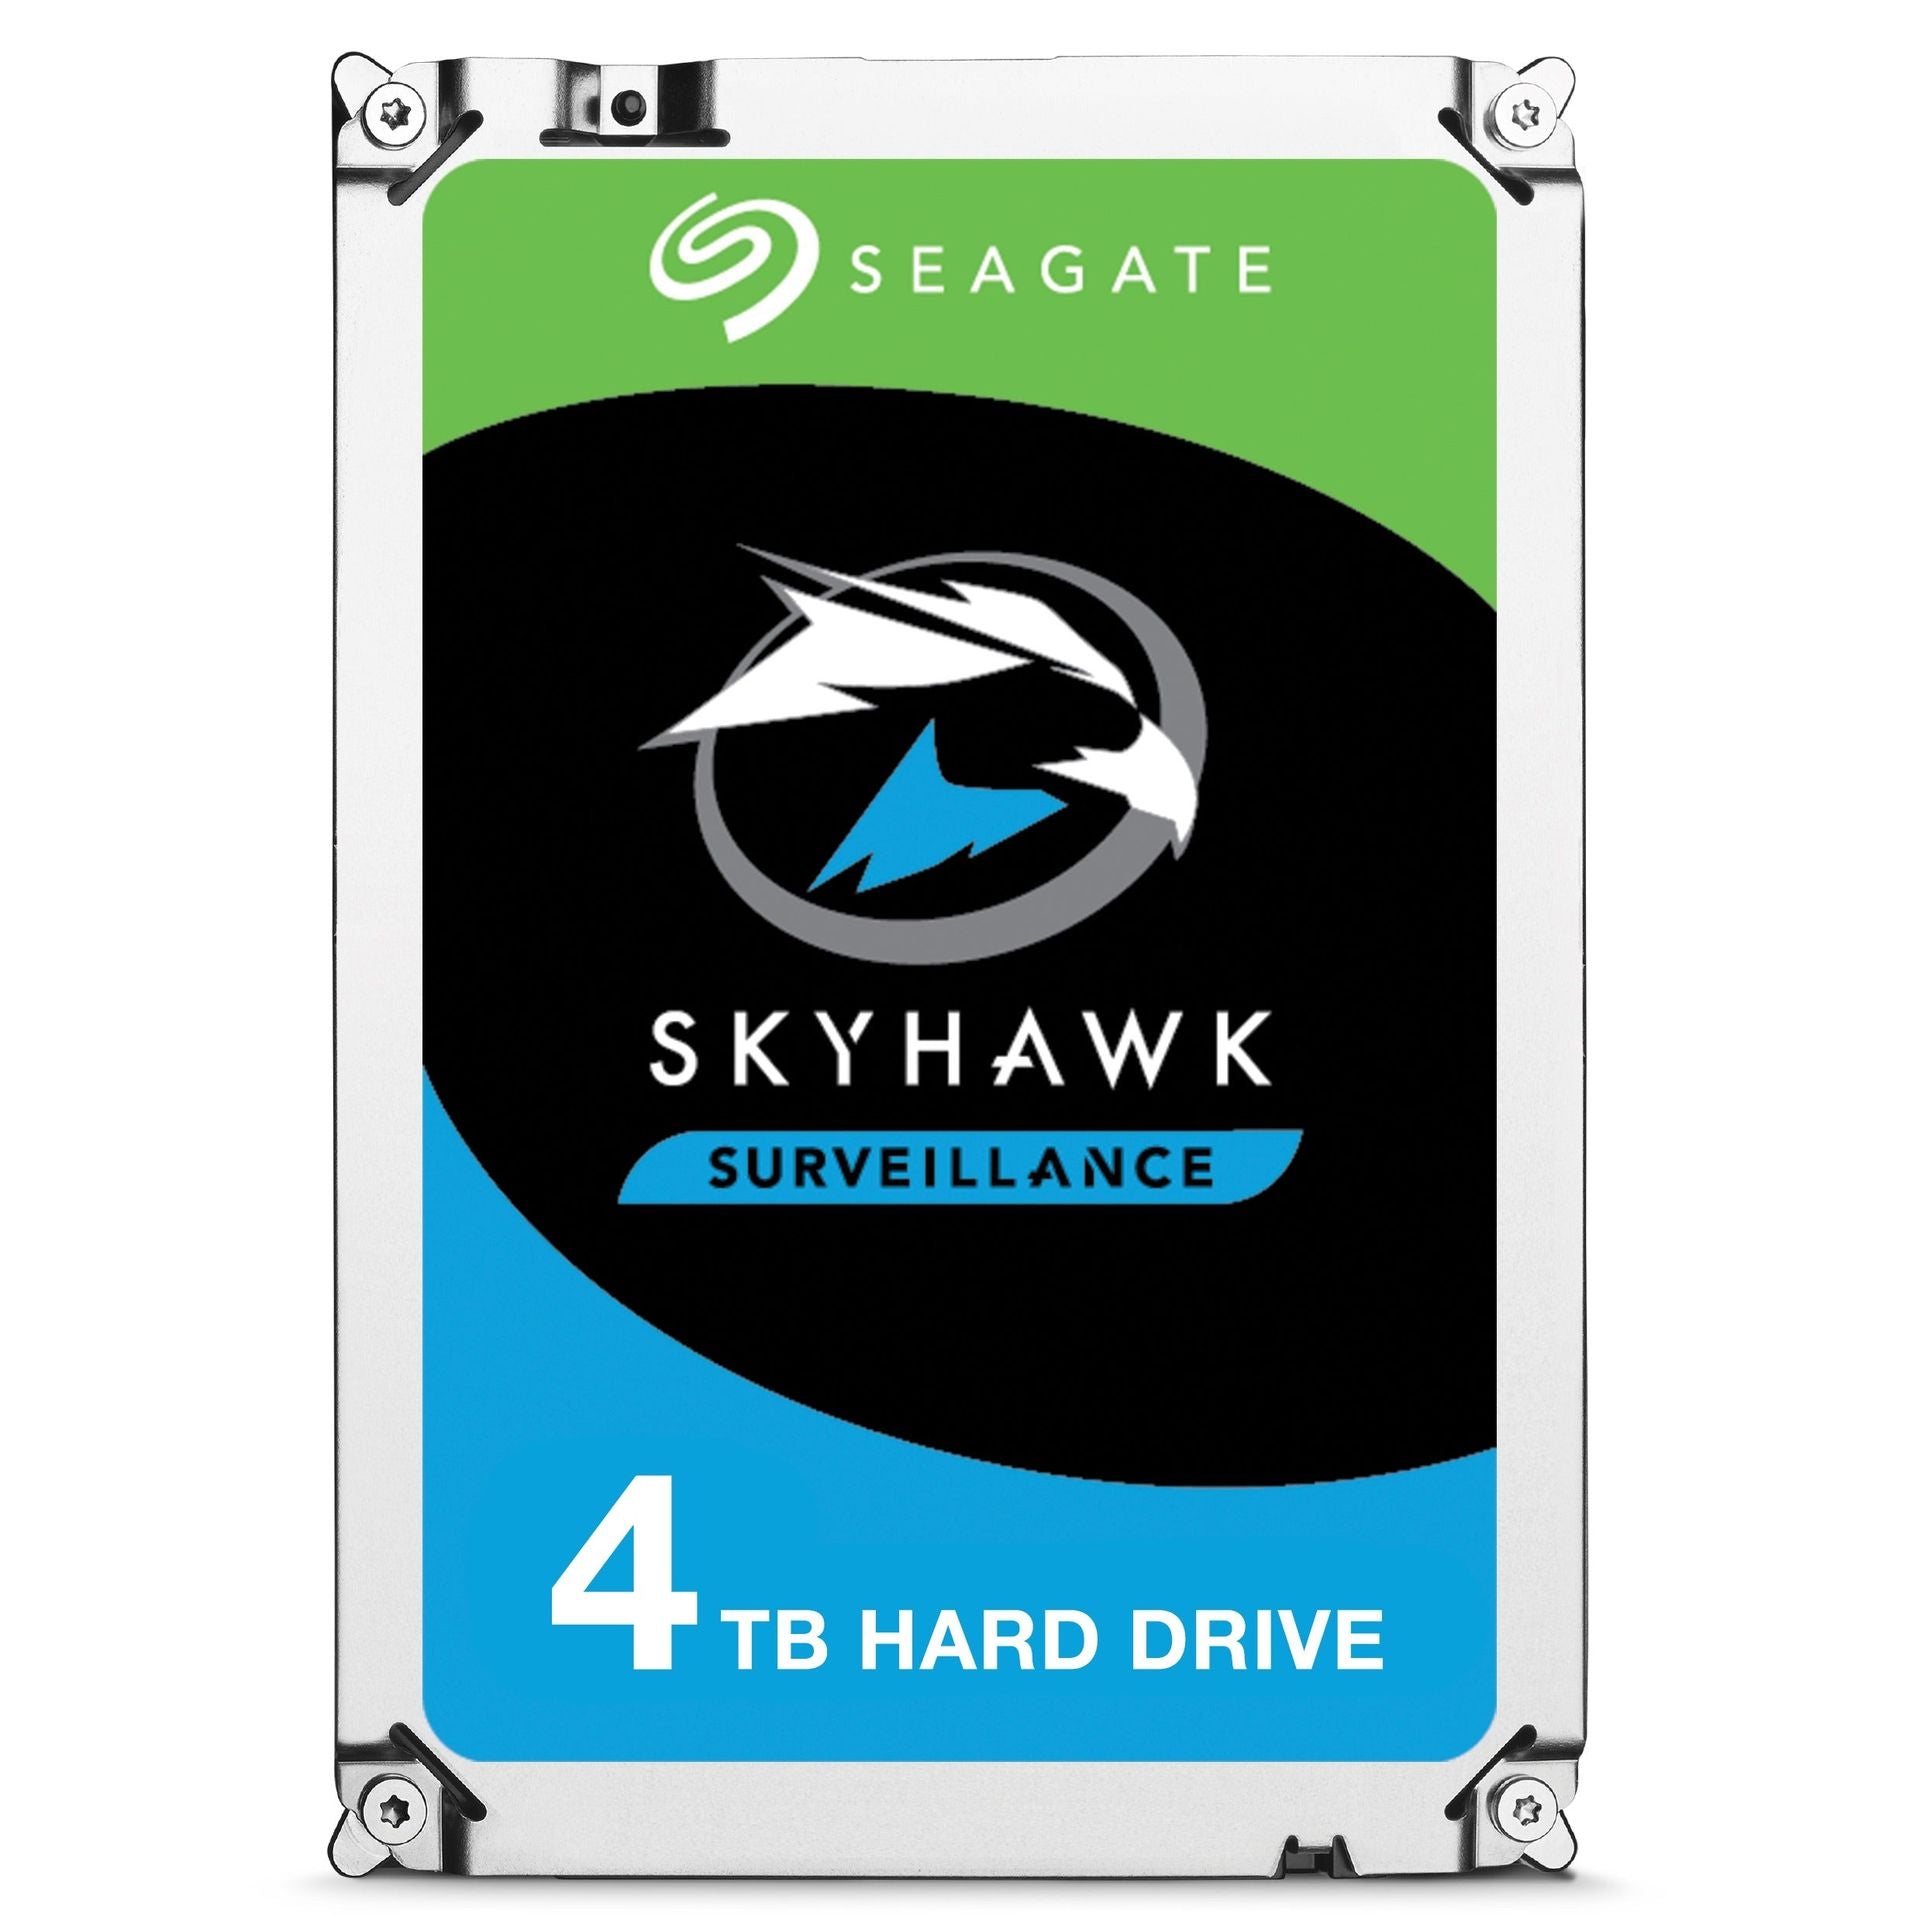 Seagate SkyHawk 4TB Internal Hard Drive 3.5" 4 tb Serial ATA III PN ST4000VX007